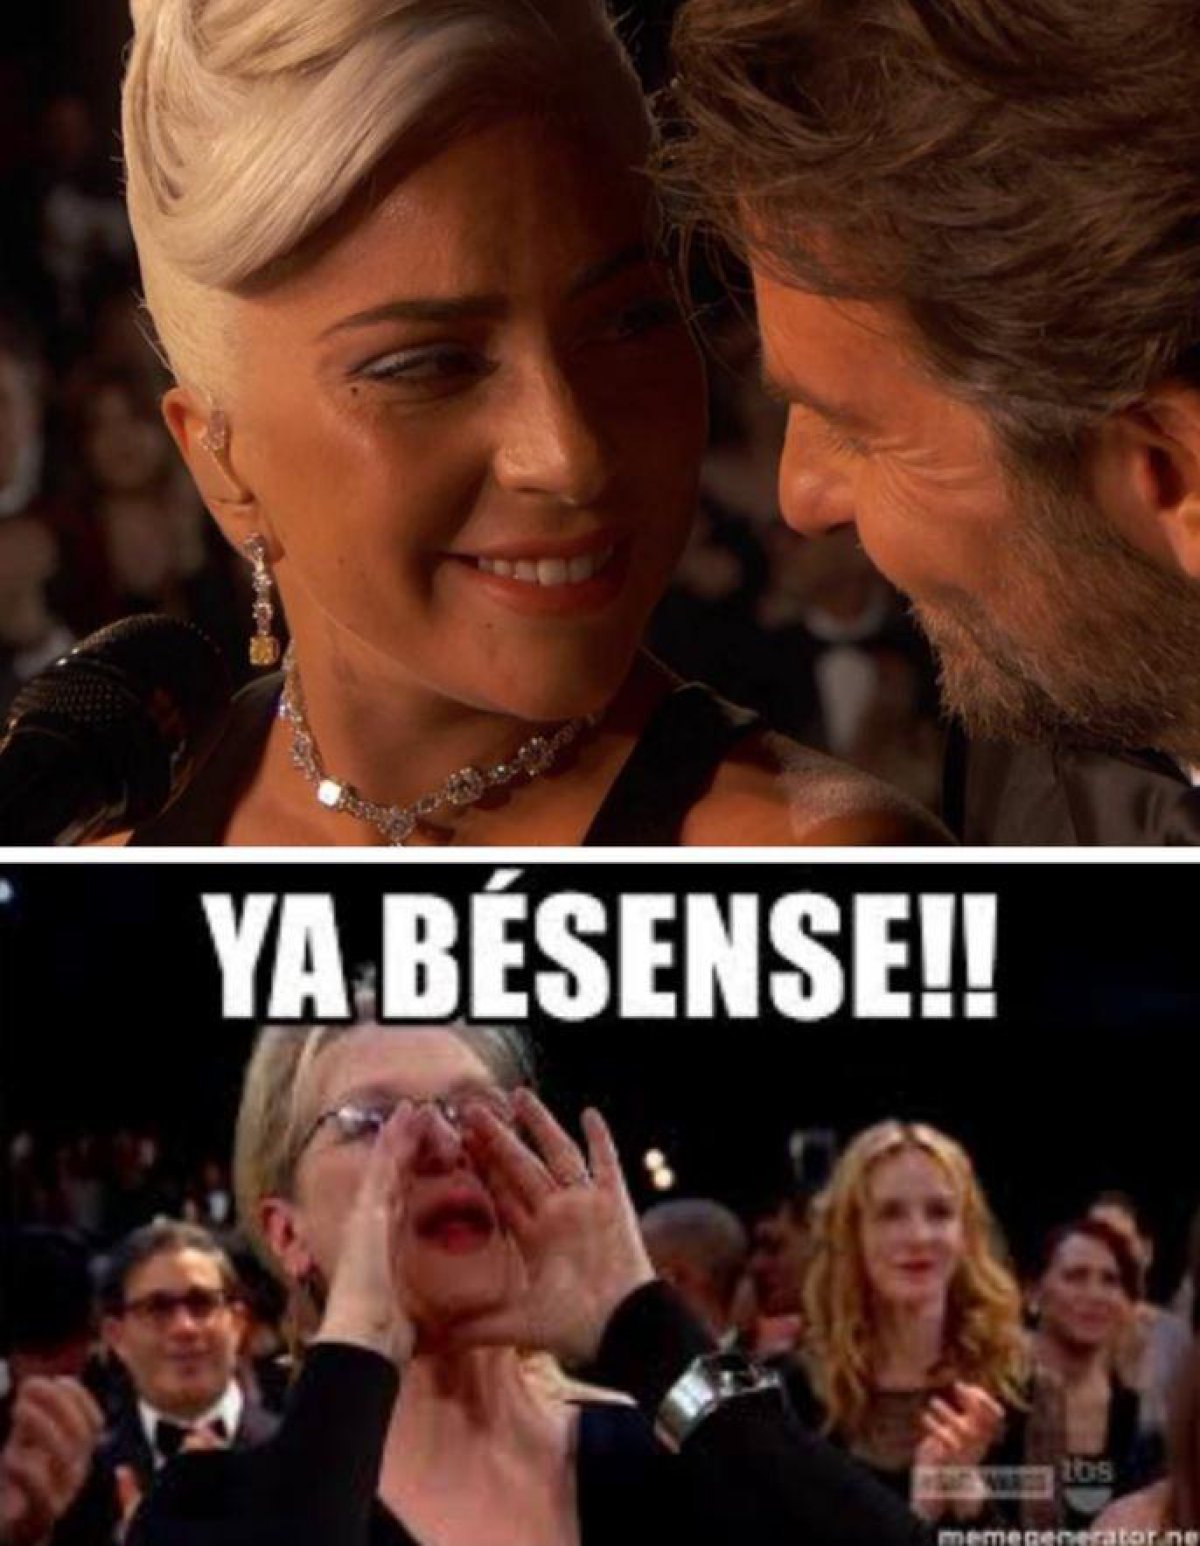 Irina Shayk desata ola de memes por sentarse entre Lady Gaga y Bradley Cooper